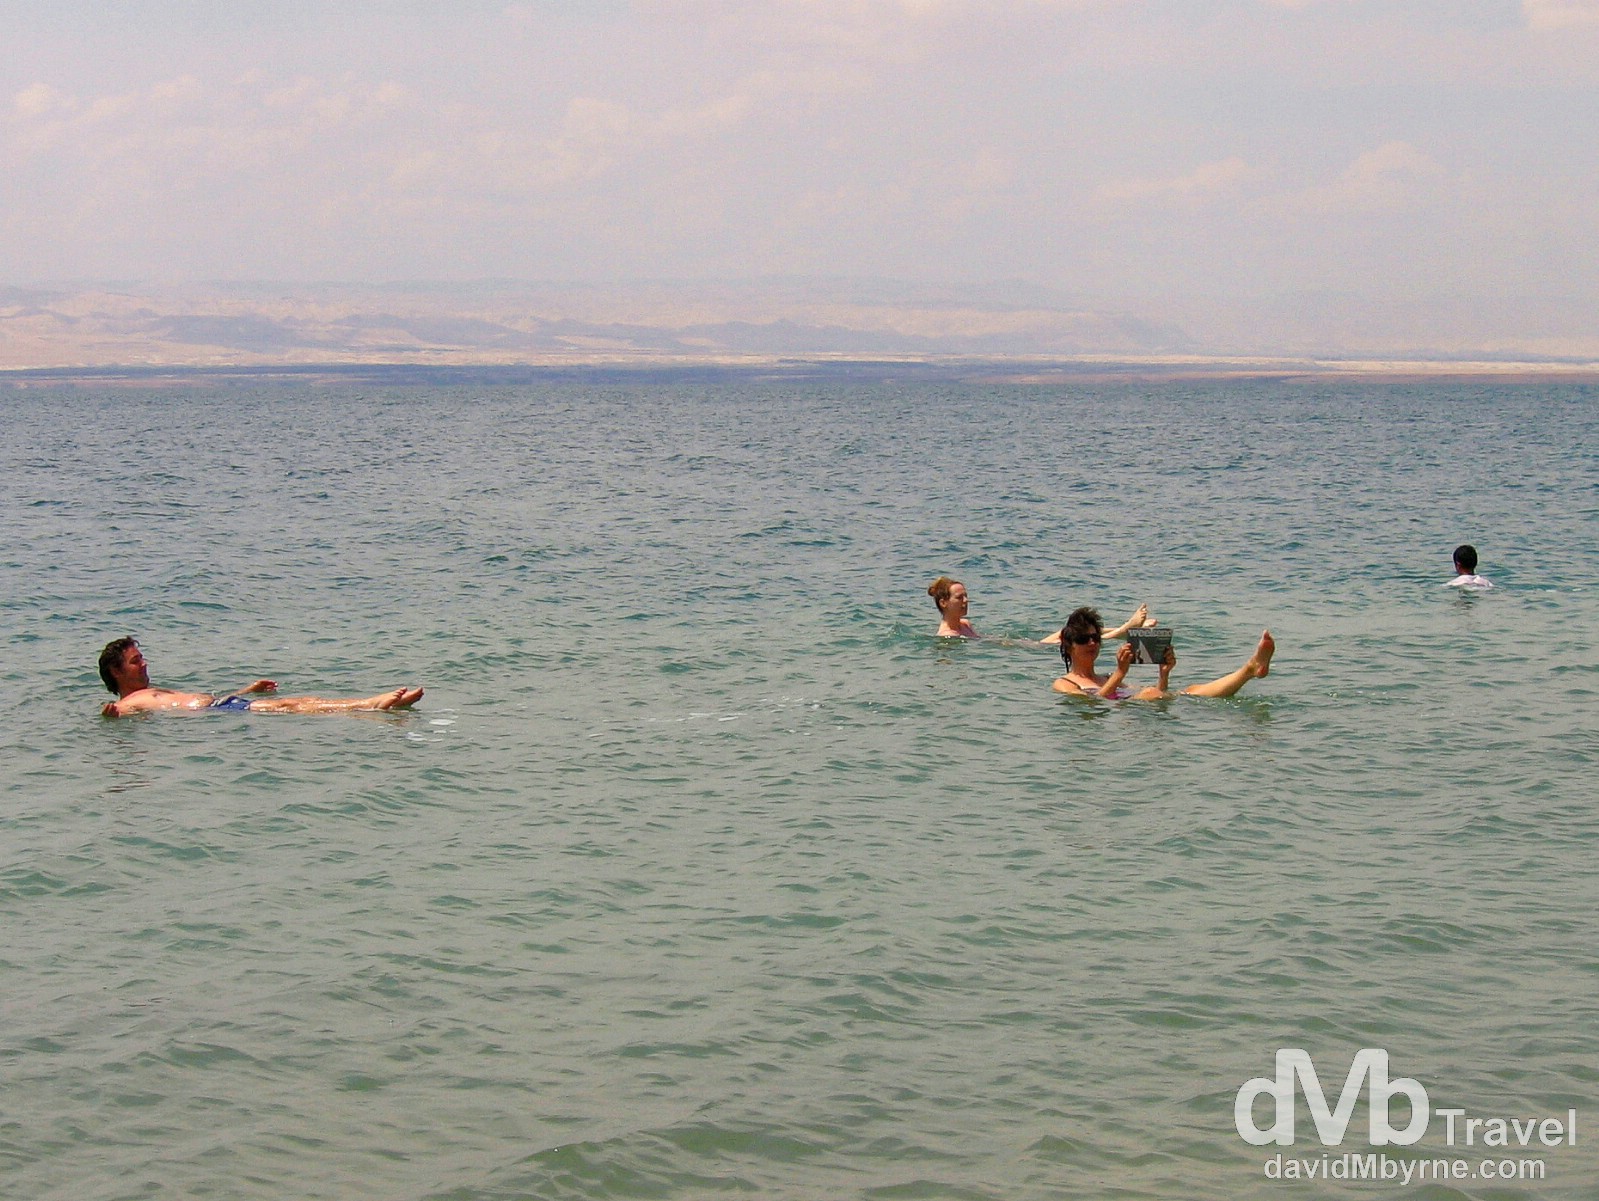 Mt. Nebo, Madaba & the Dead Sea, Jordan